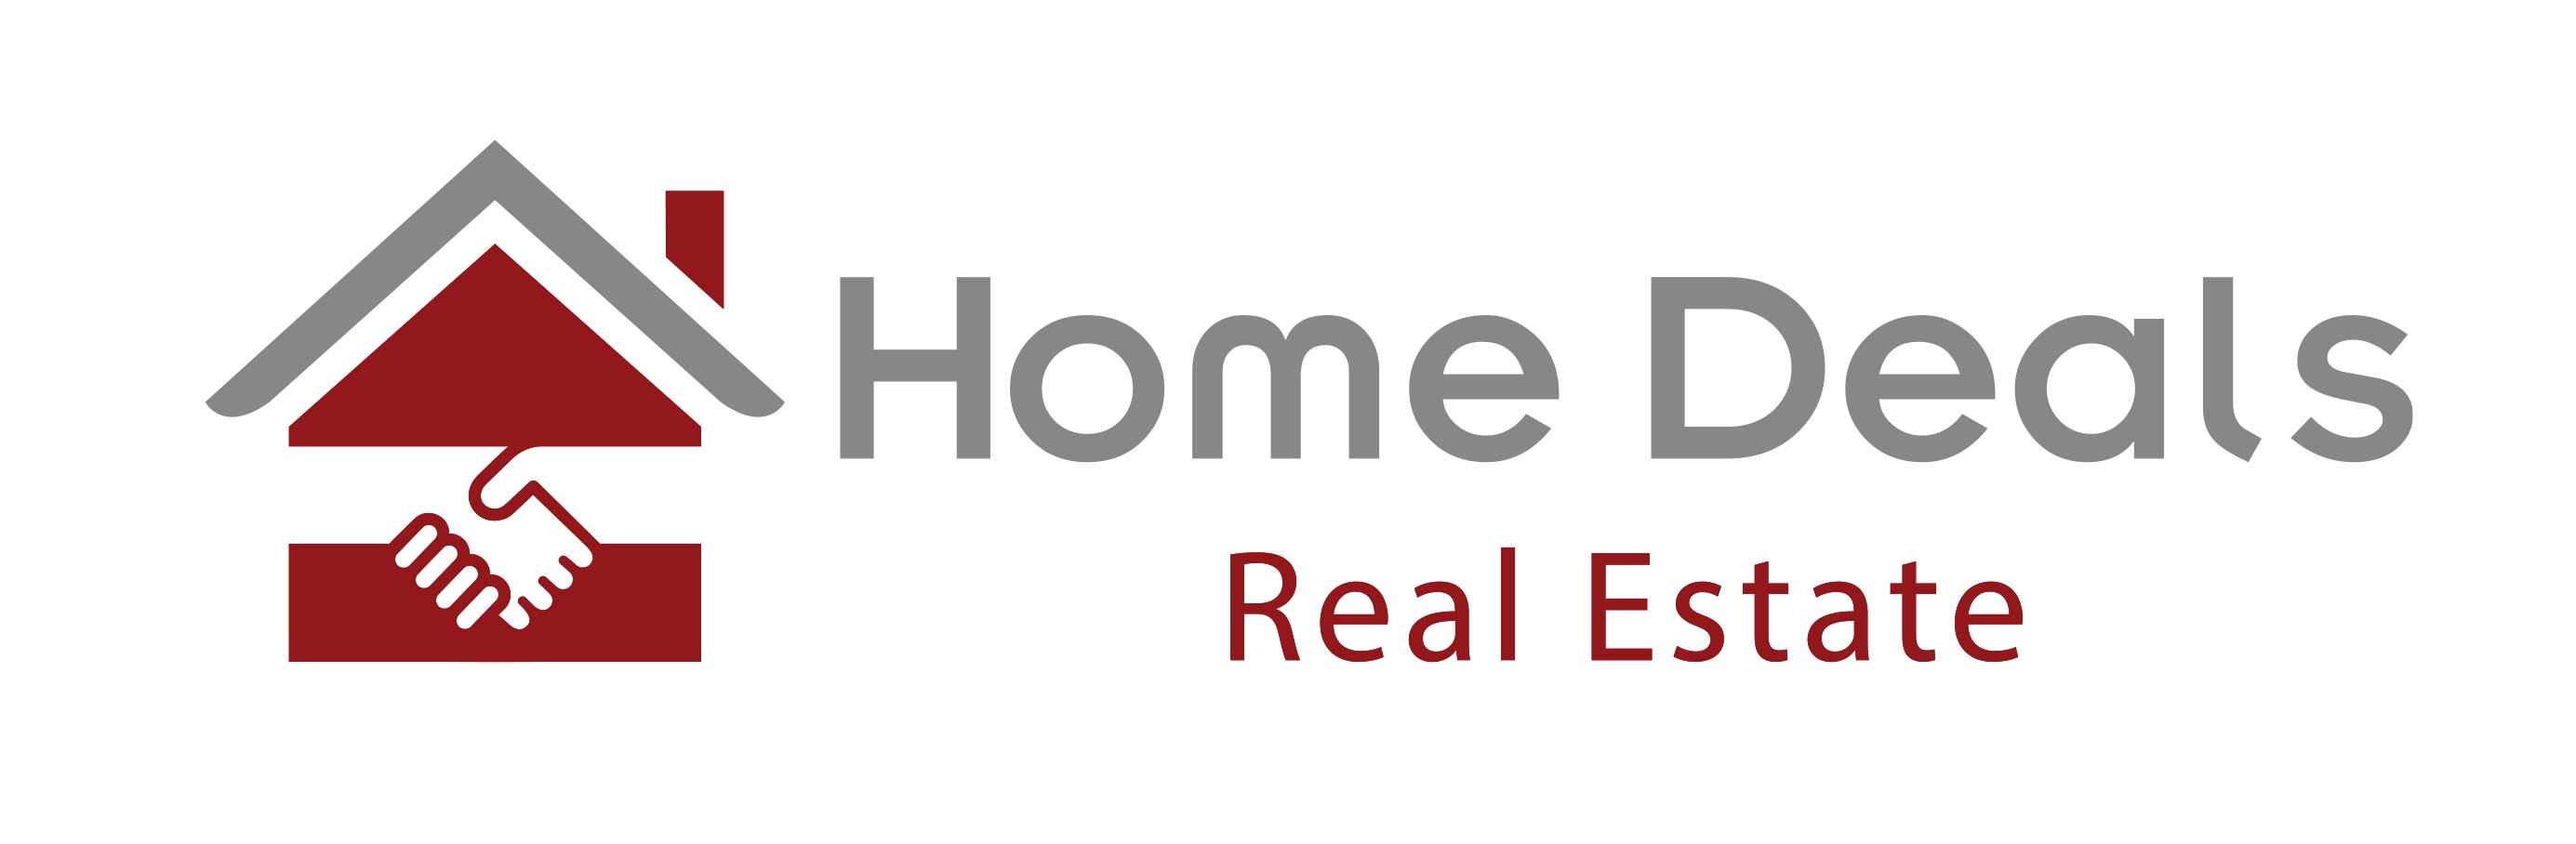 Home Deals Real Estate